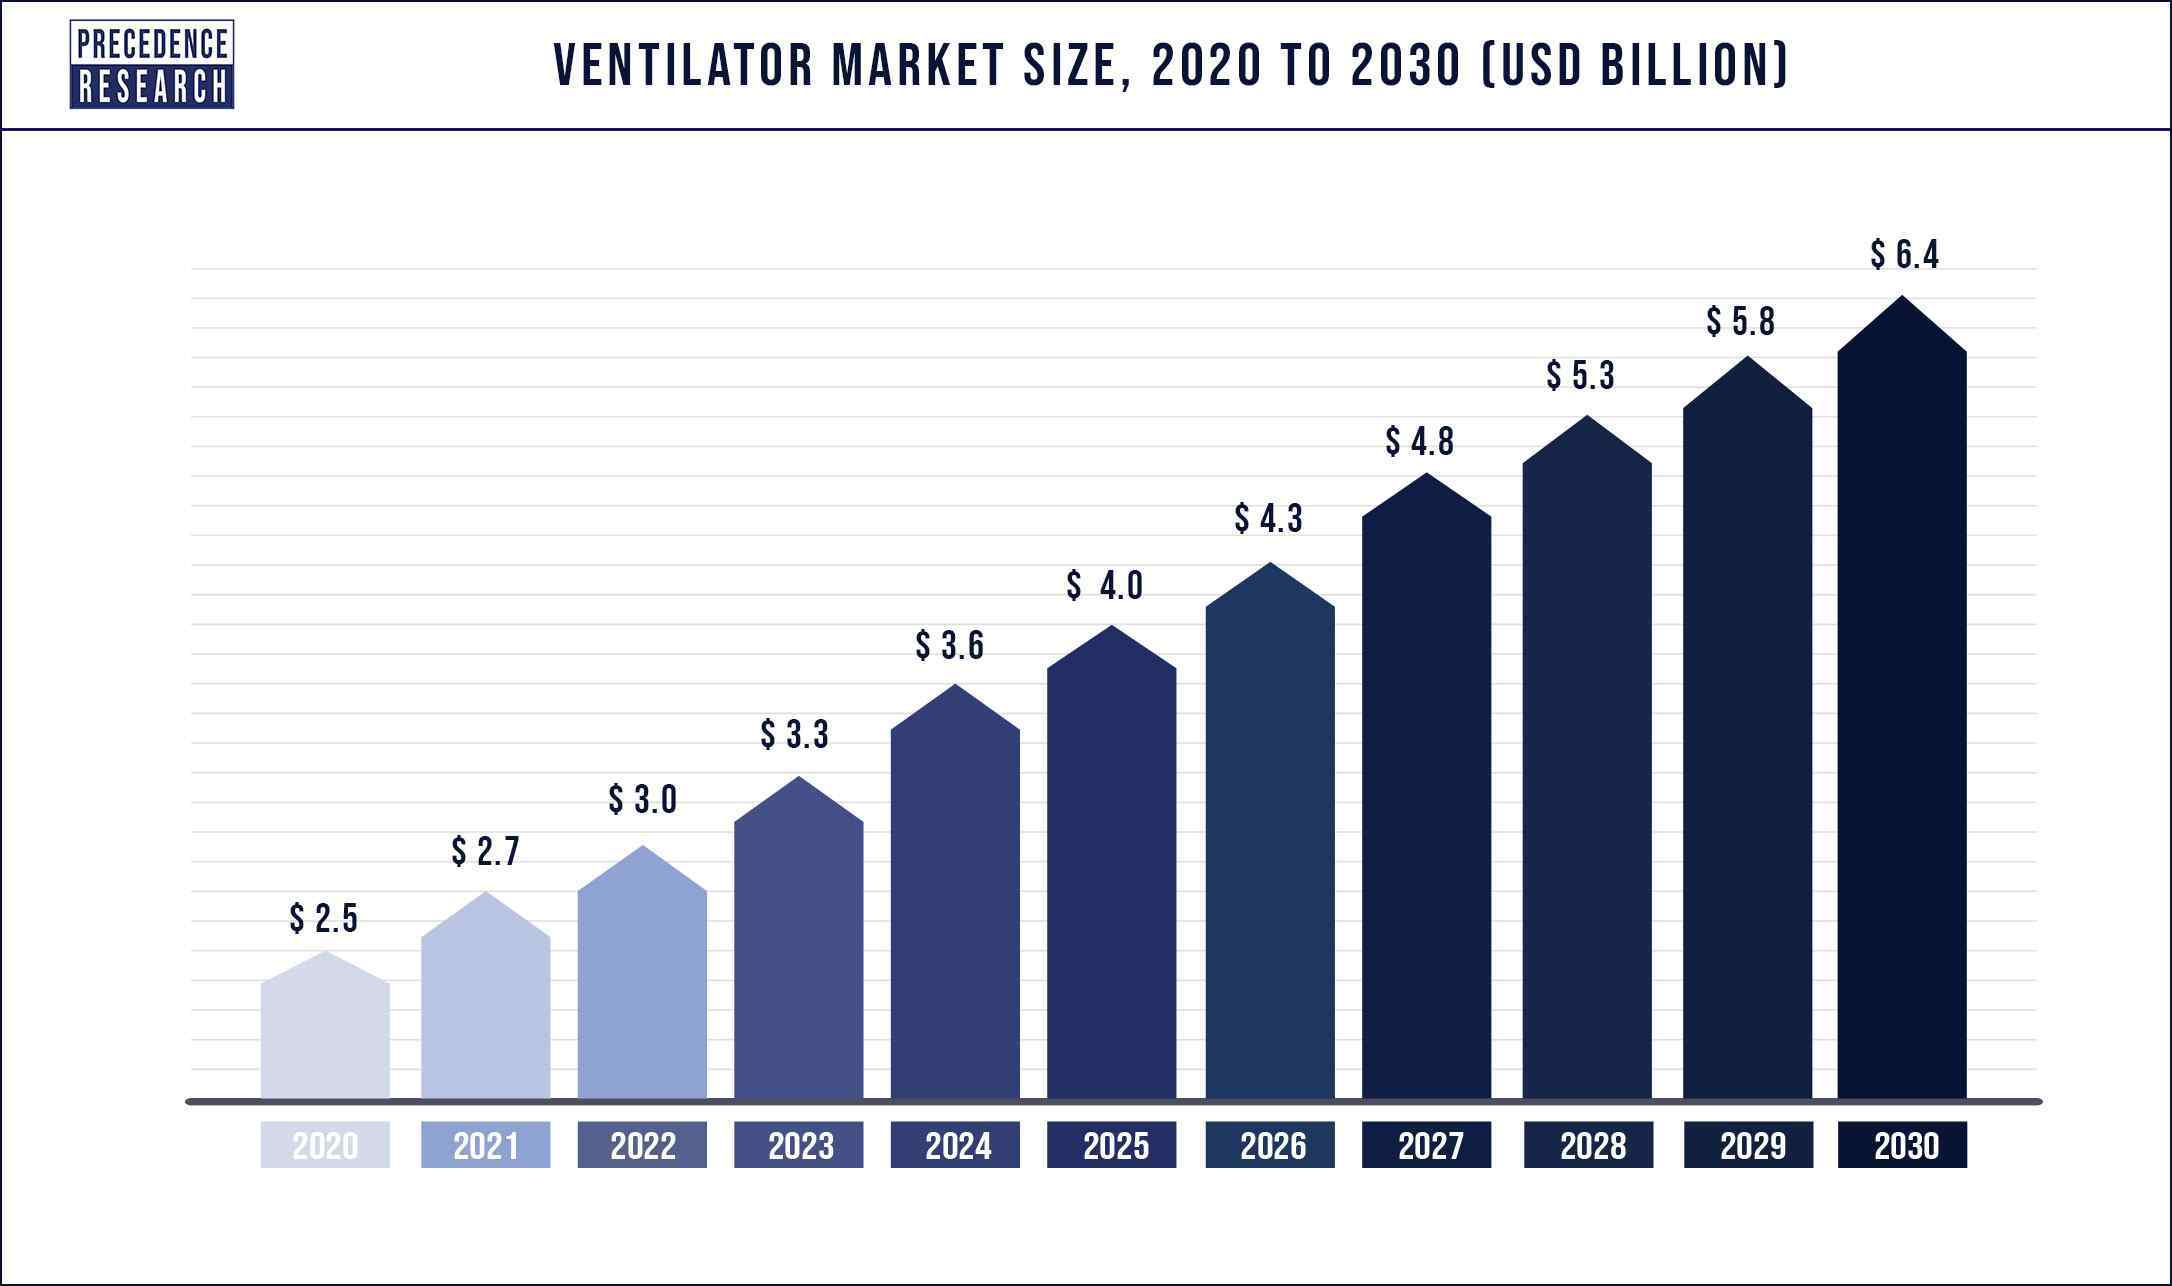 Ventilator Market Size 2020 to 2030